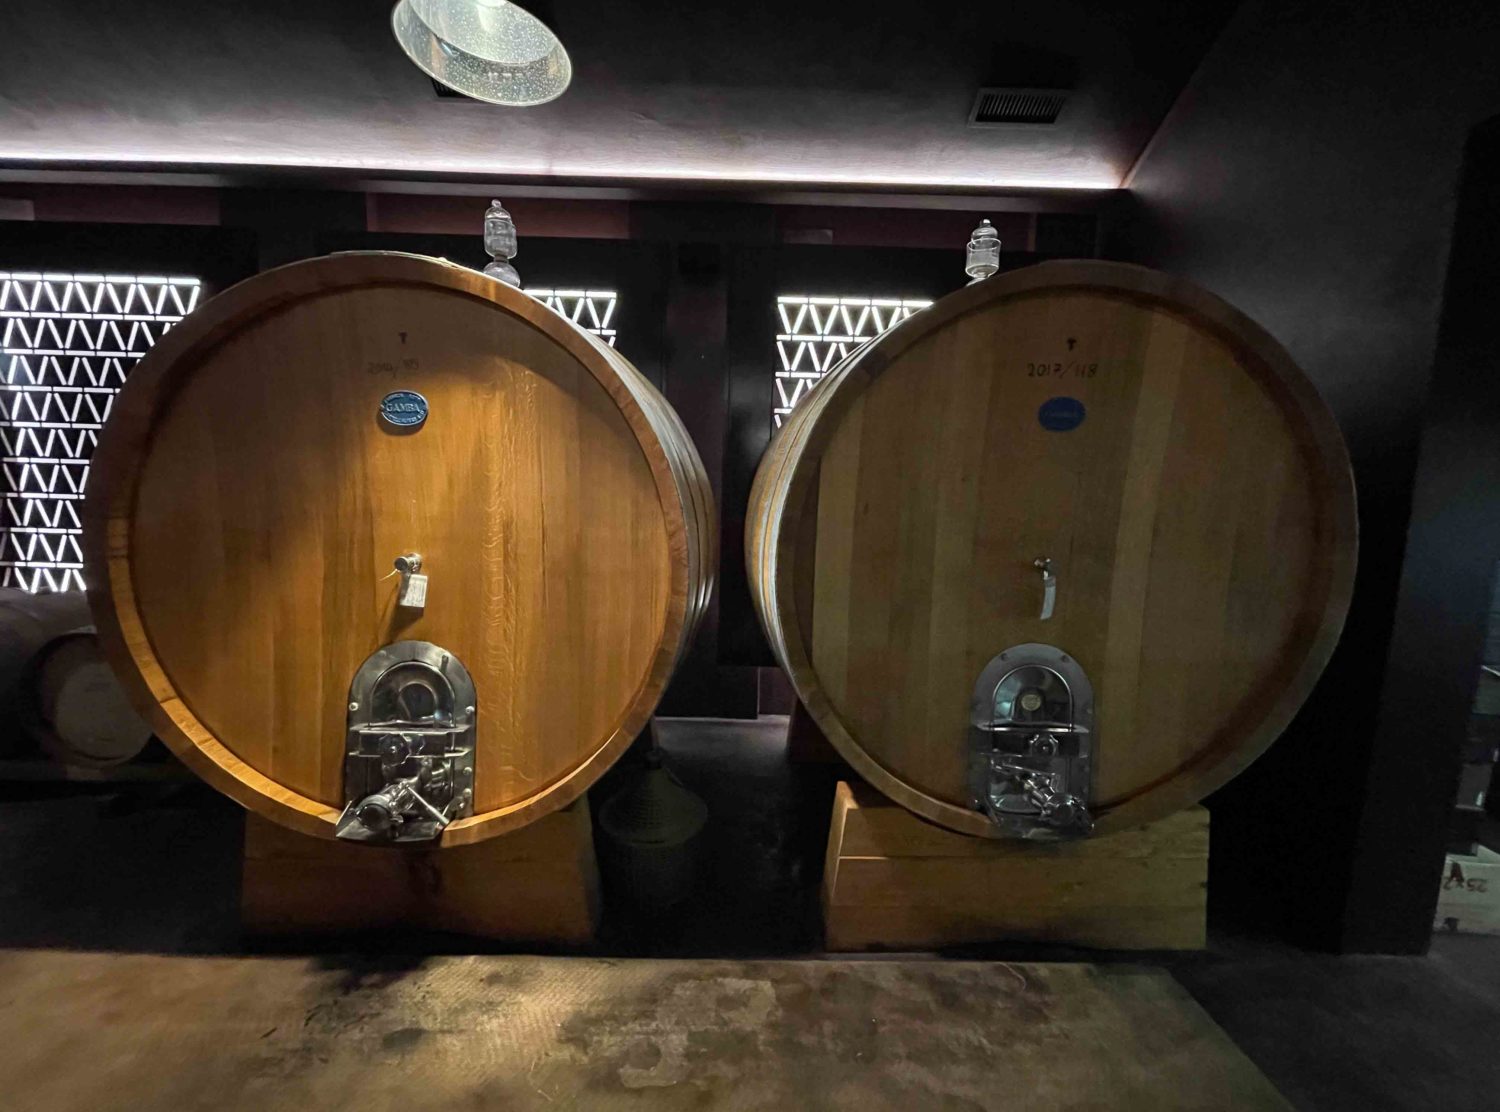 Castelfalfi In the cellars where Castelfalfi wines mature, those barrels hold the 